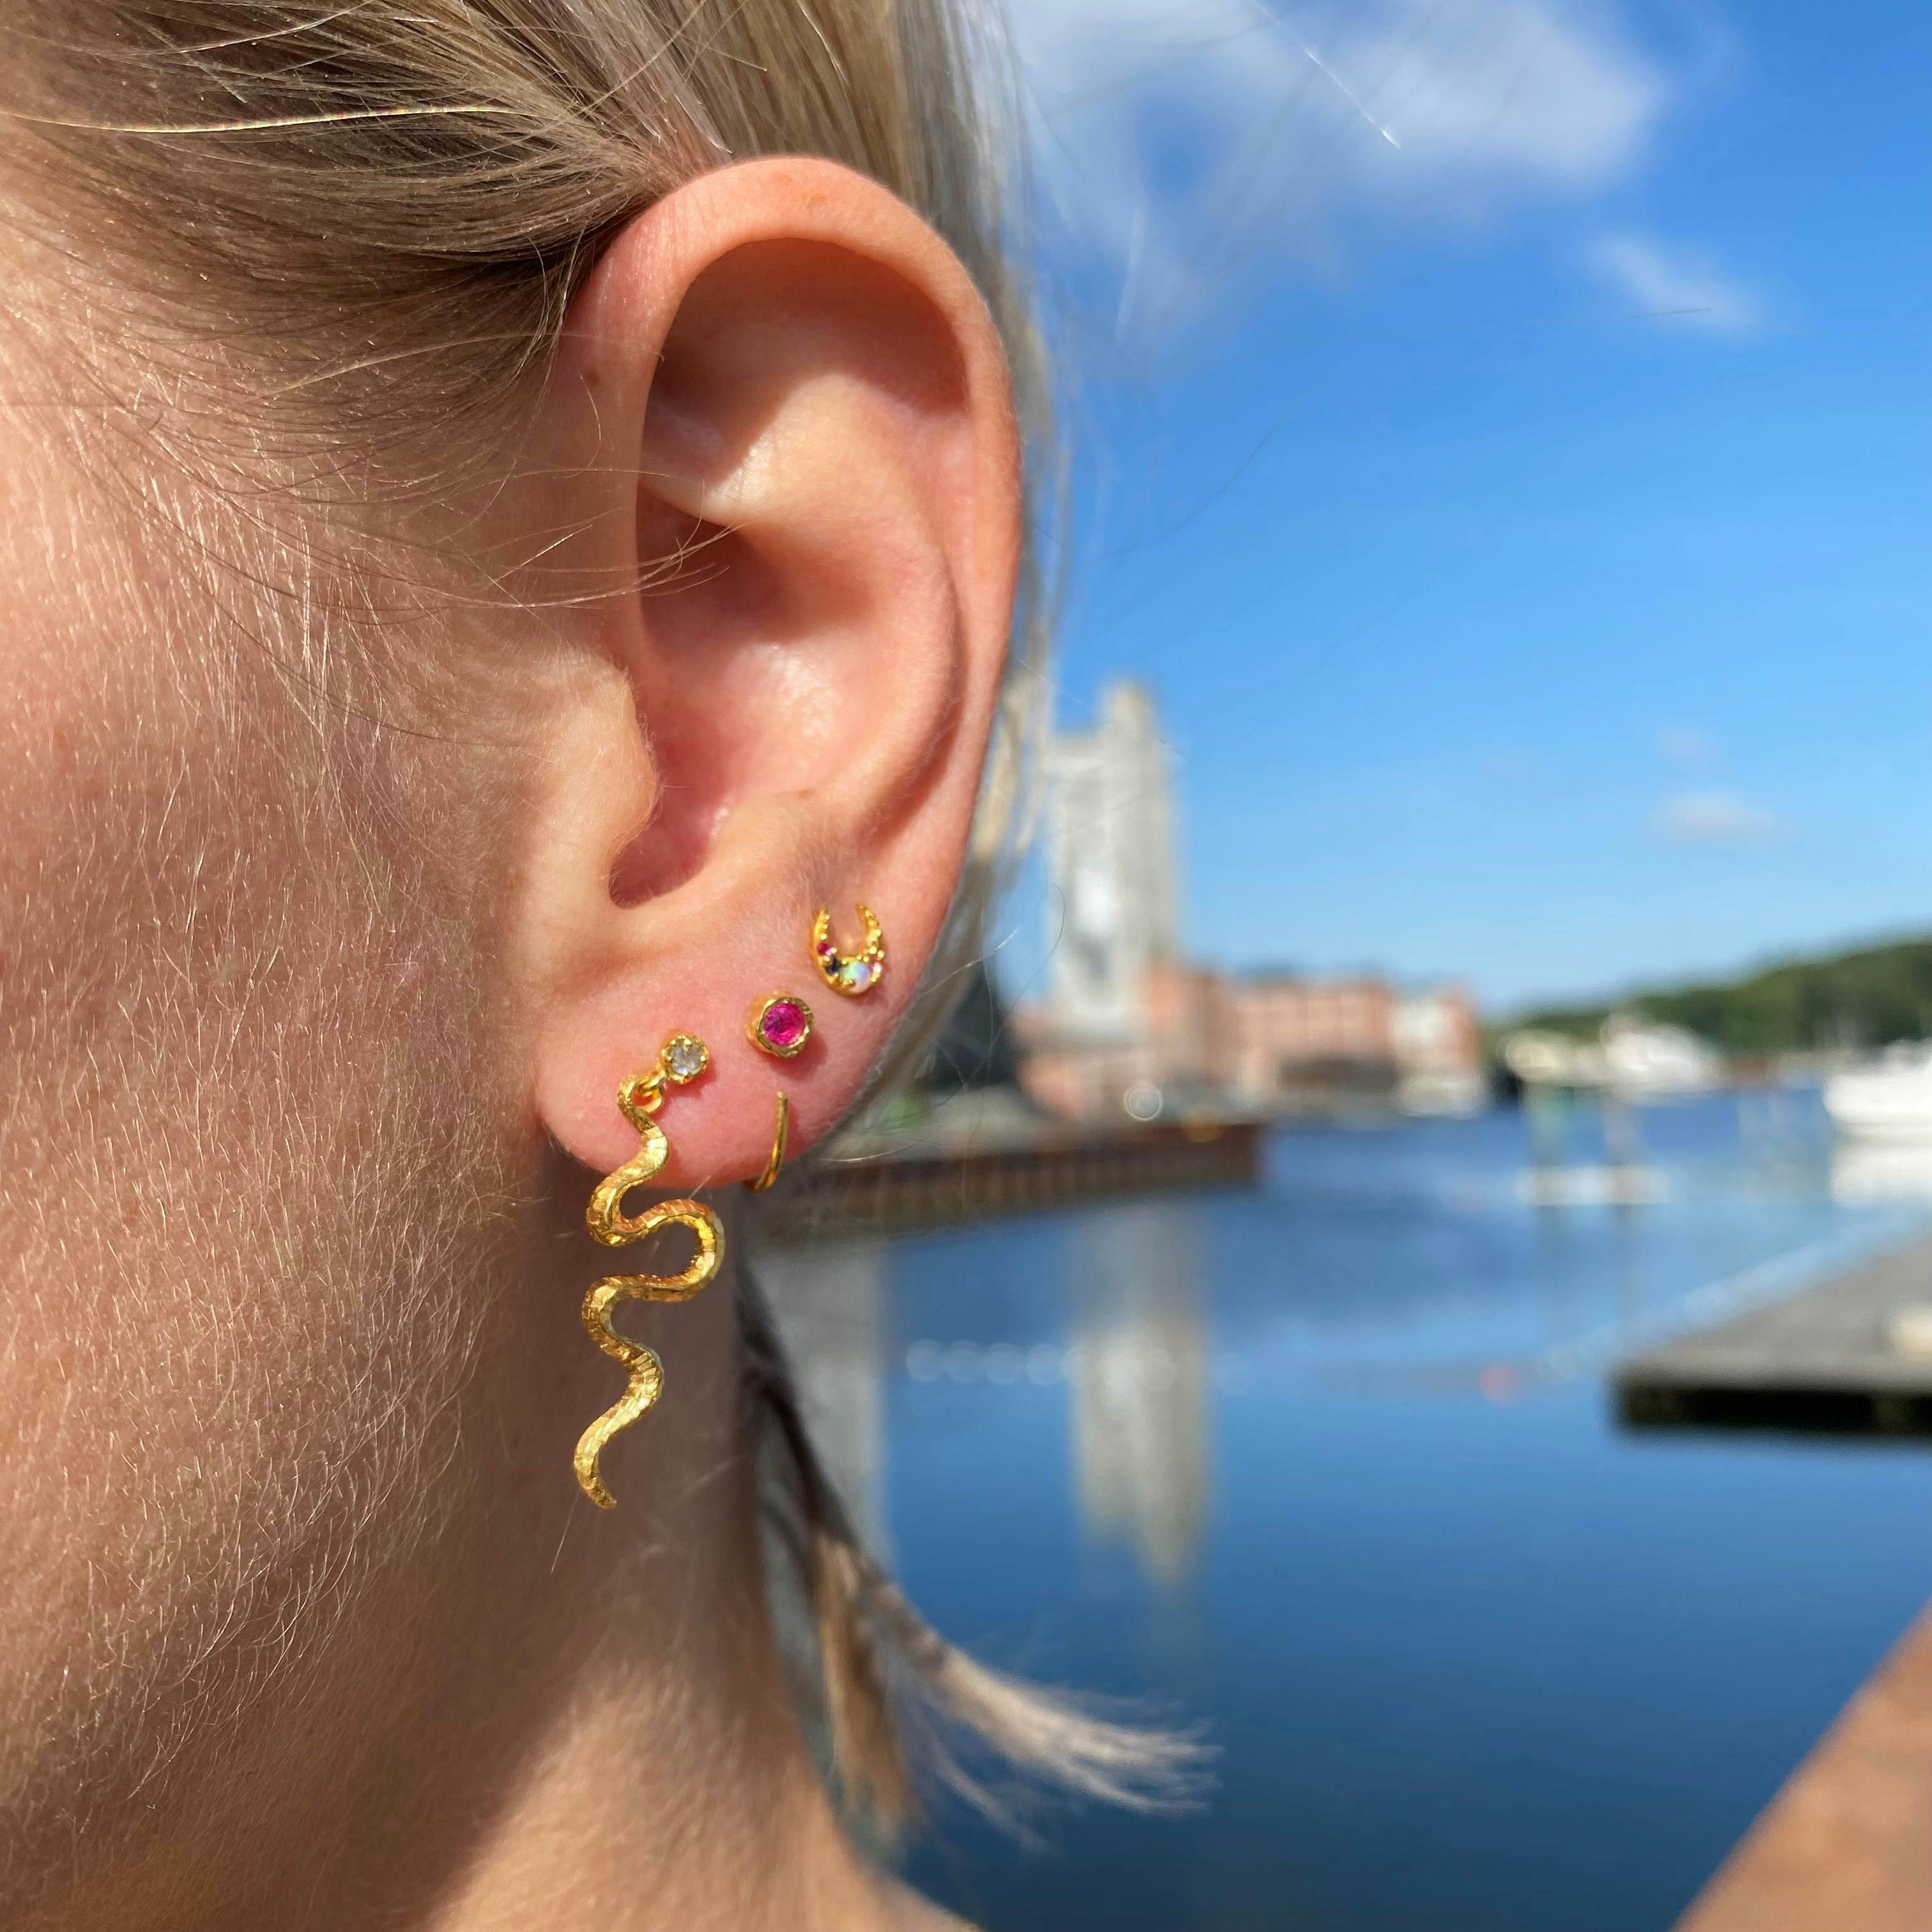 Lucy earrings von Maanesten in Vergoldet-Silber Sterling 925